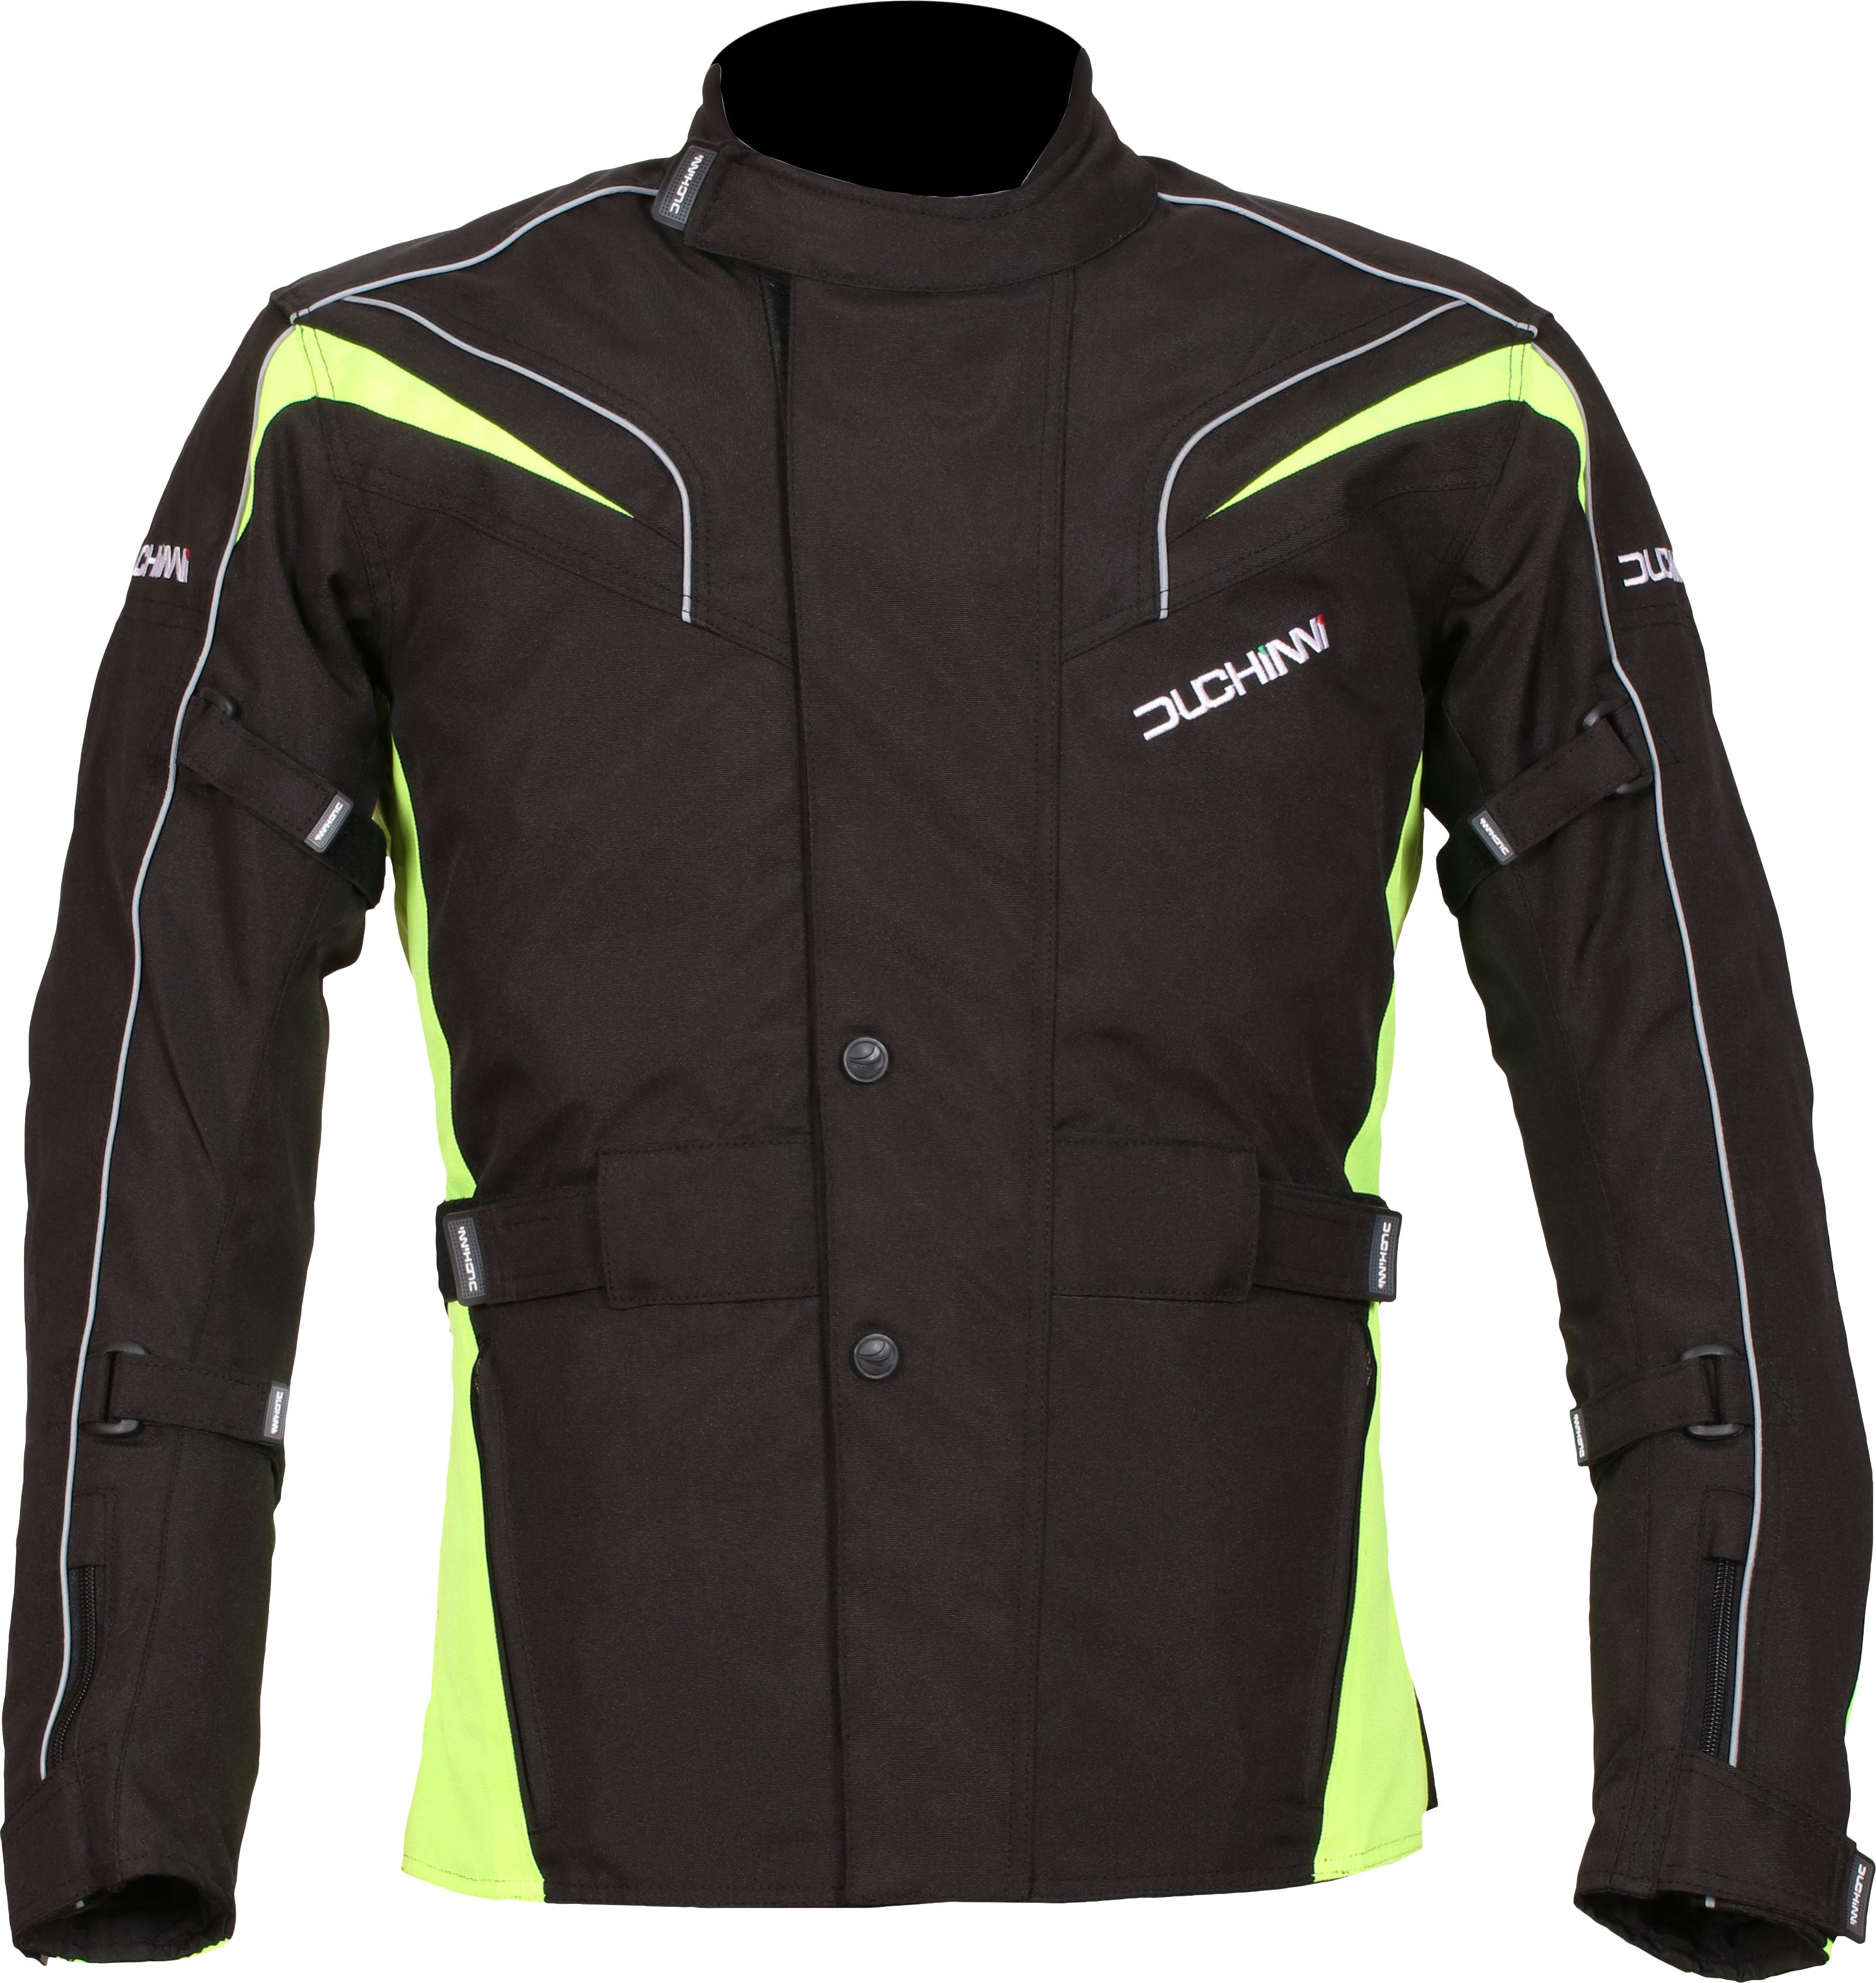 Duchinni Hurricane Motorcycle Jacket - Black And Neon, S